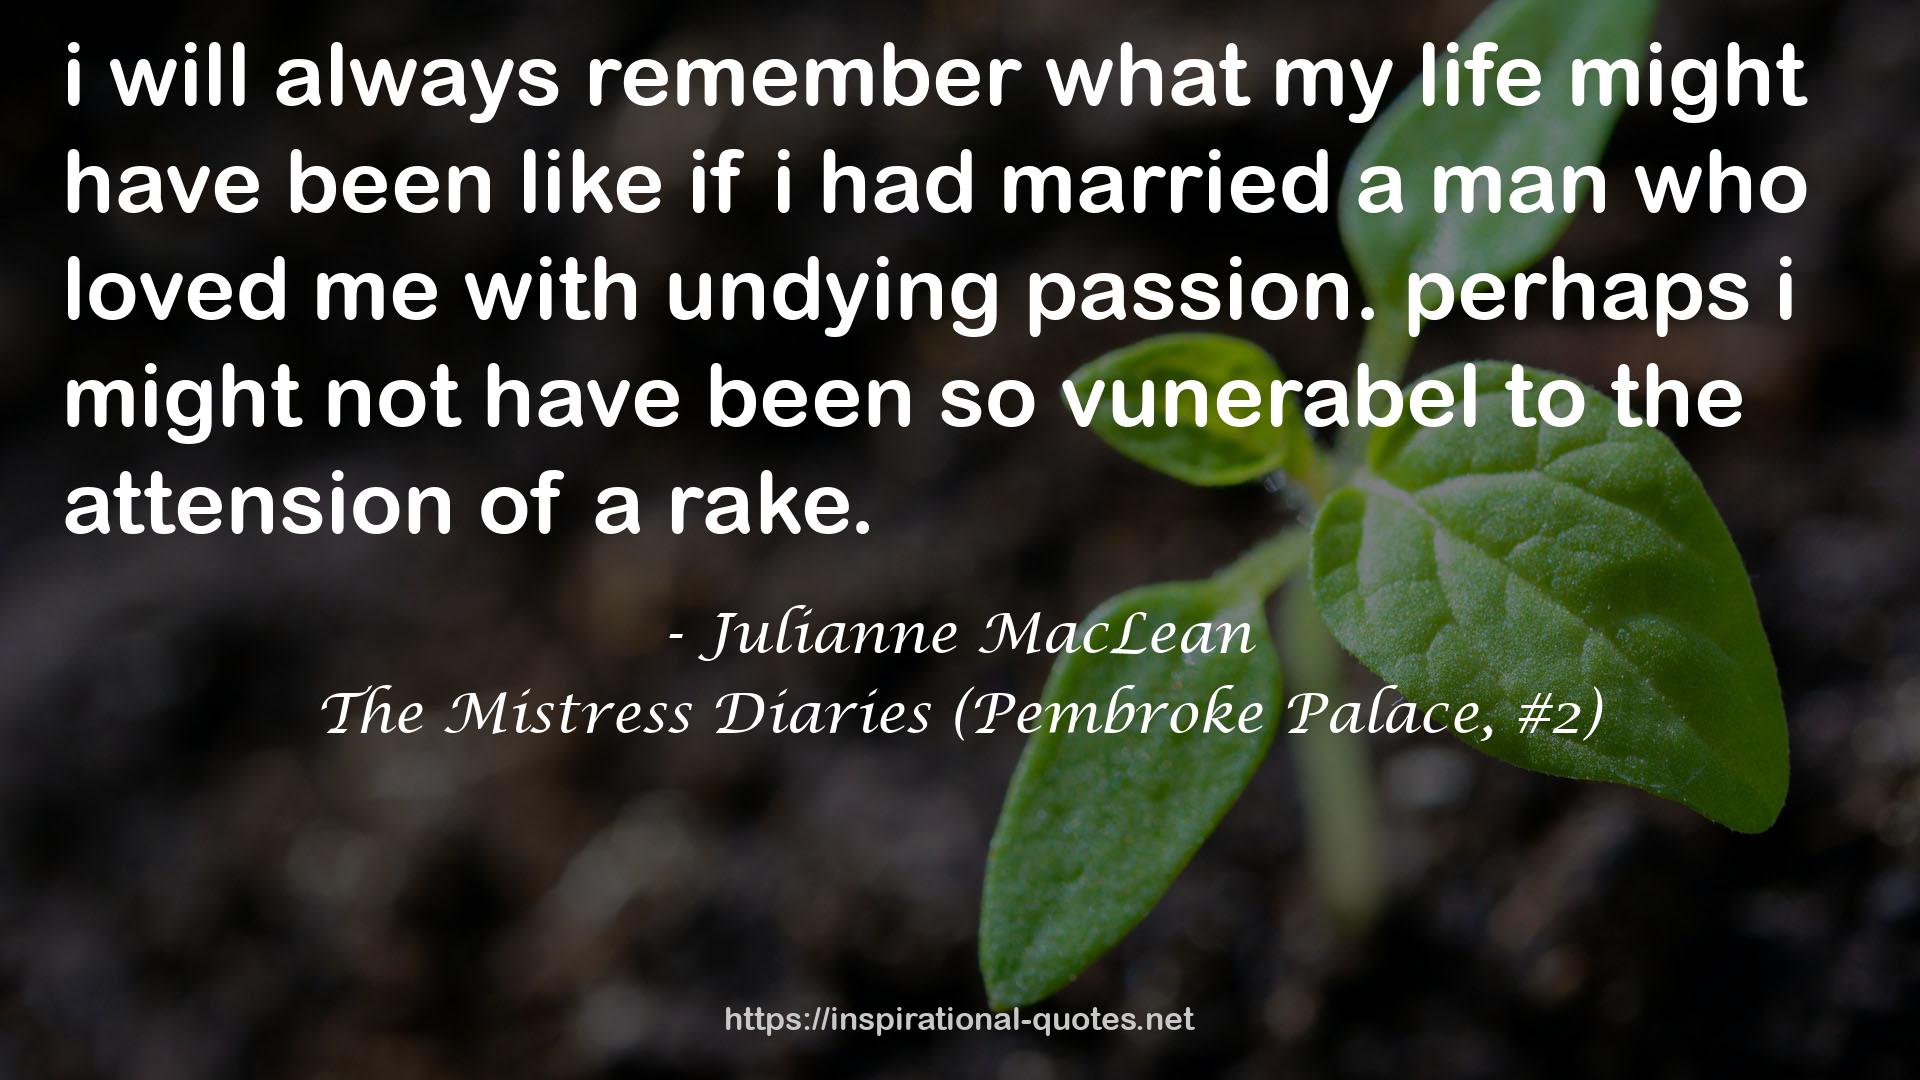 The Mistress Diaries (Pembroke Palace, #2) QUOTES